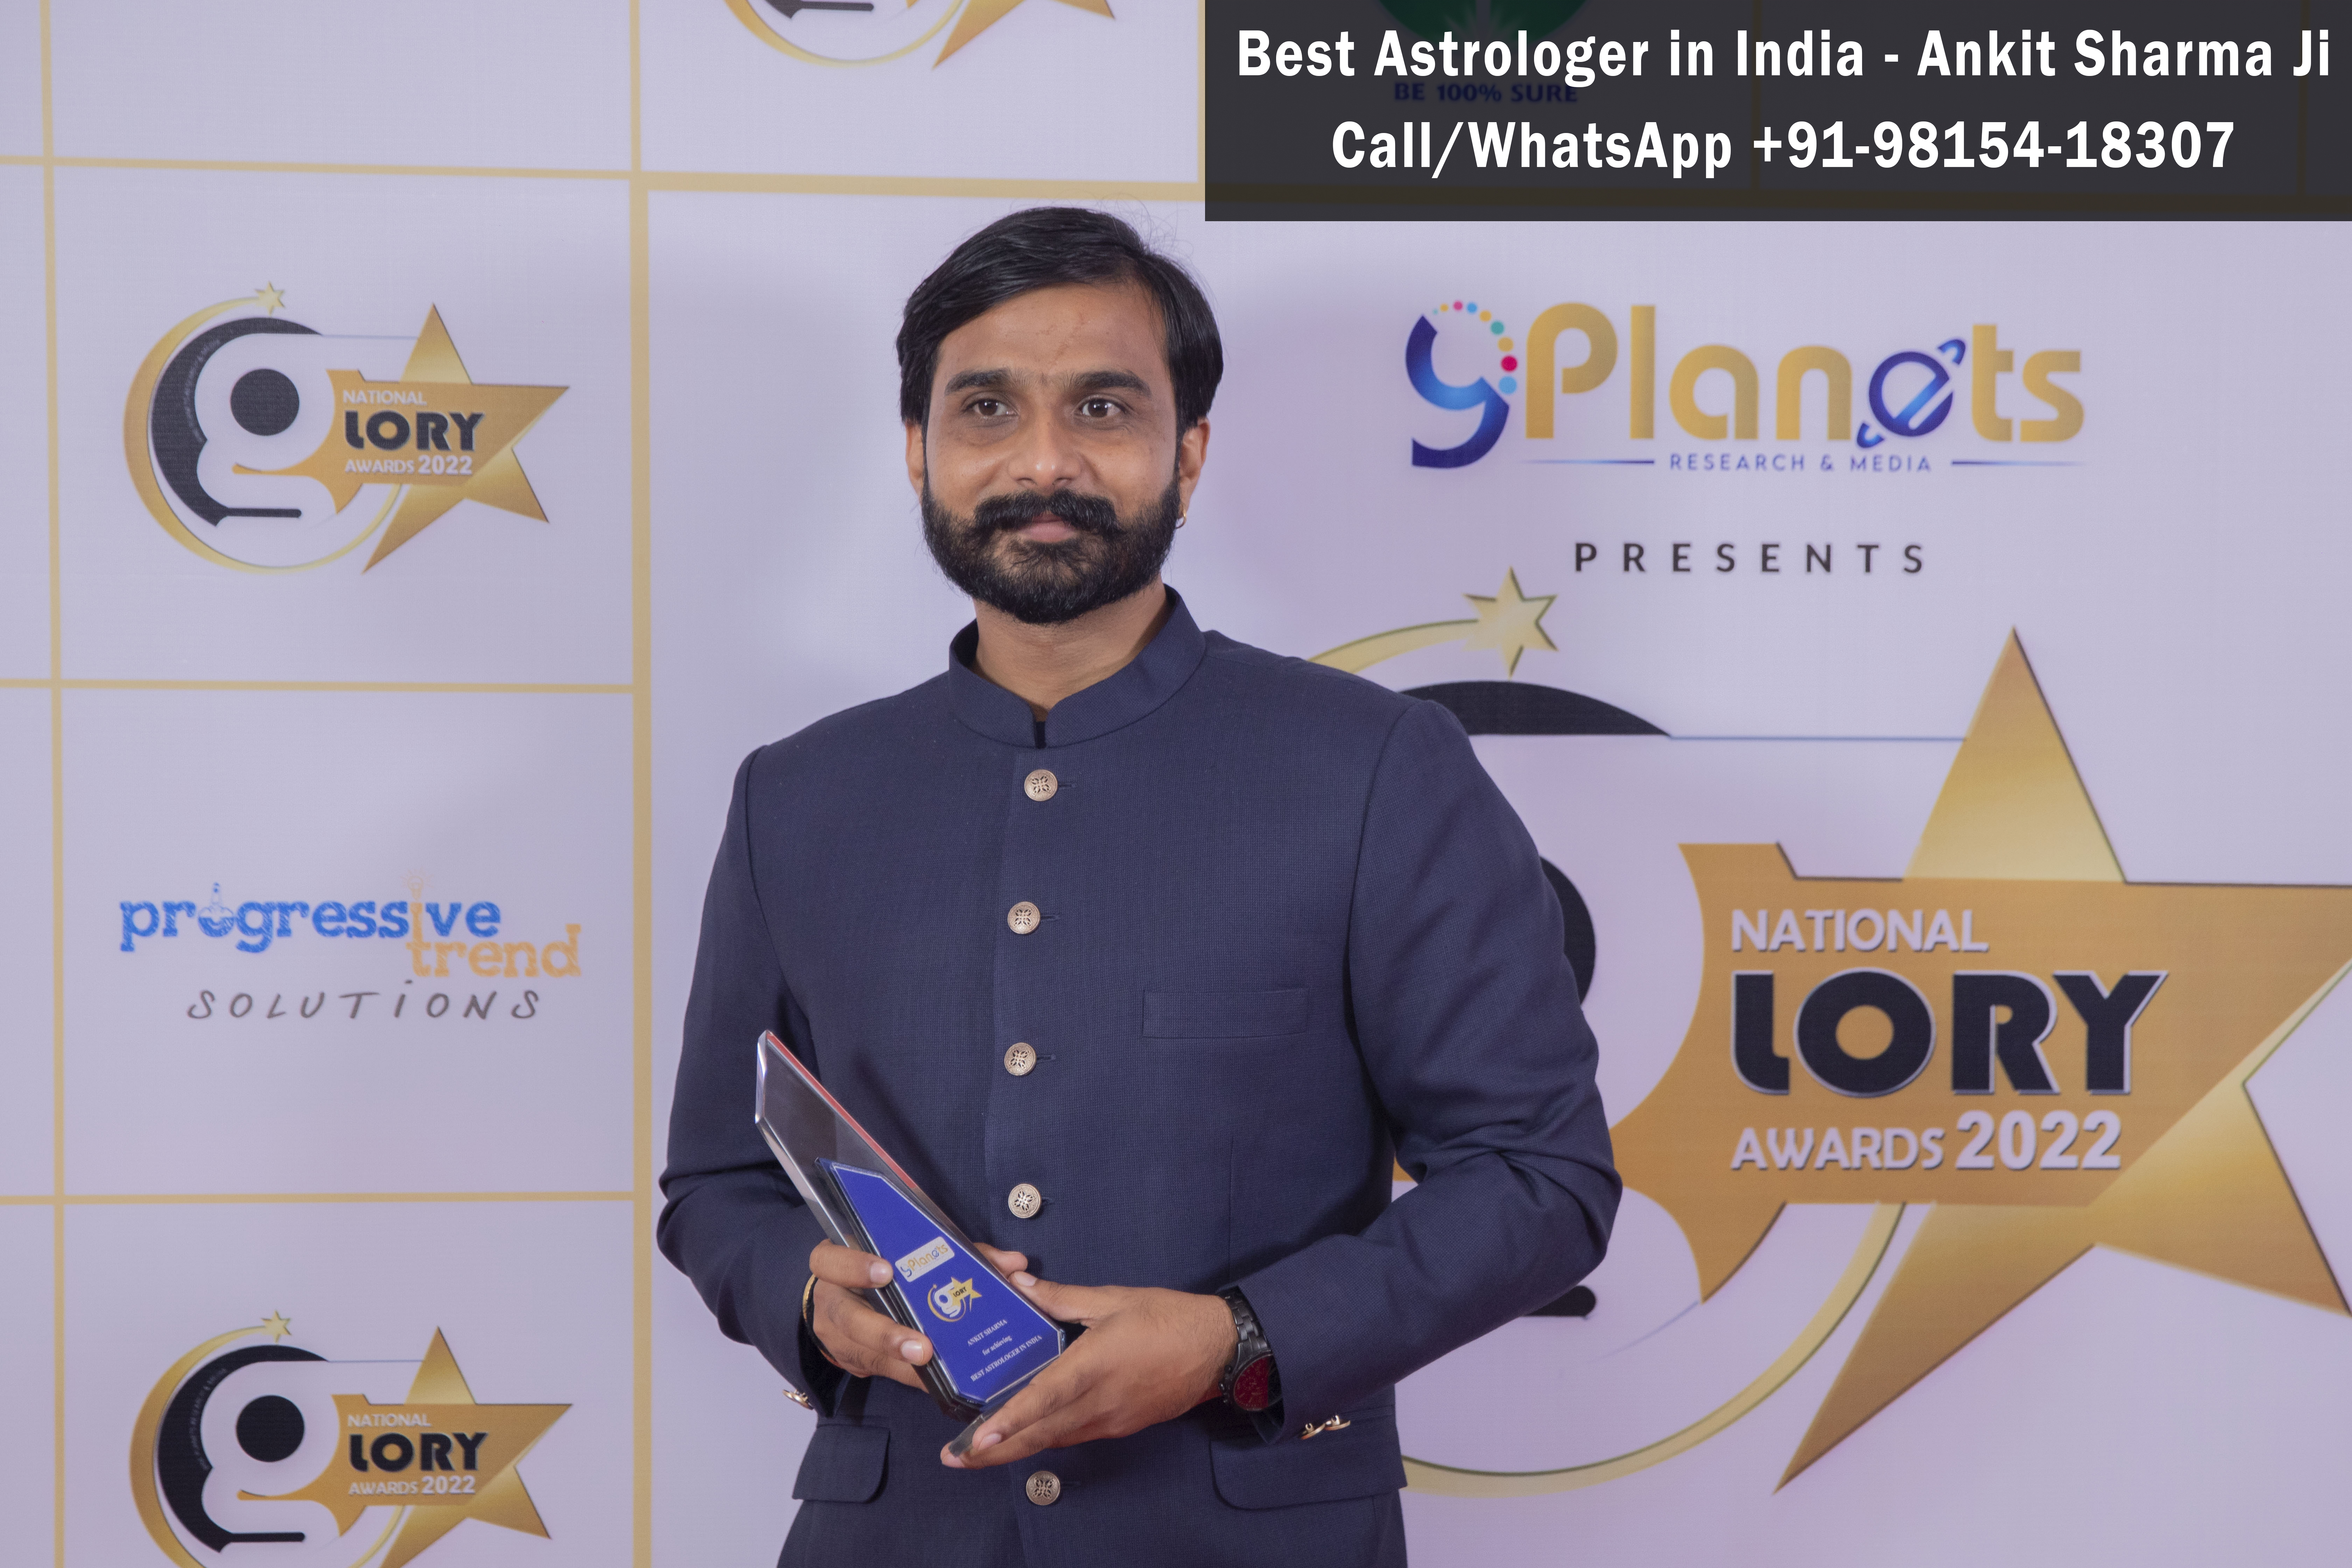 Best Astrologer in India - Ankit Sharma Ji | Call at +91-98154-18307